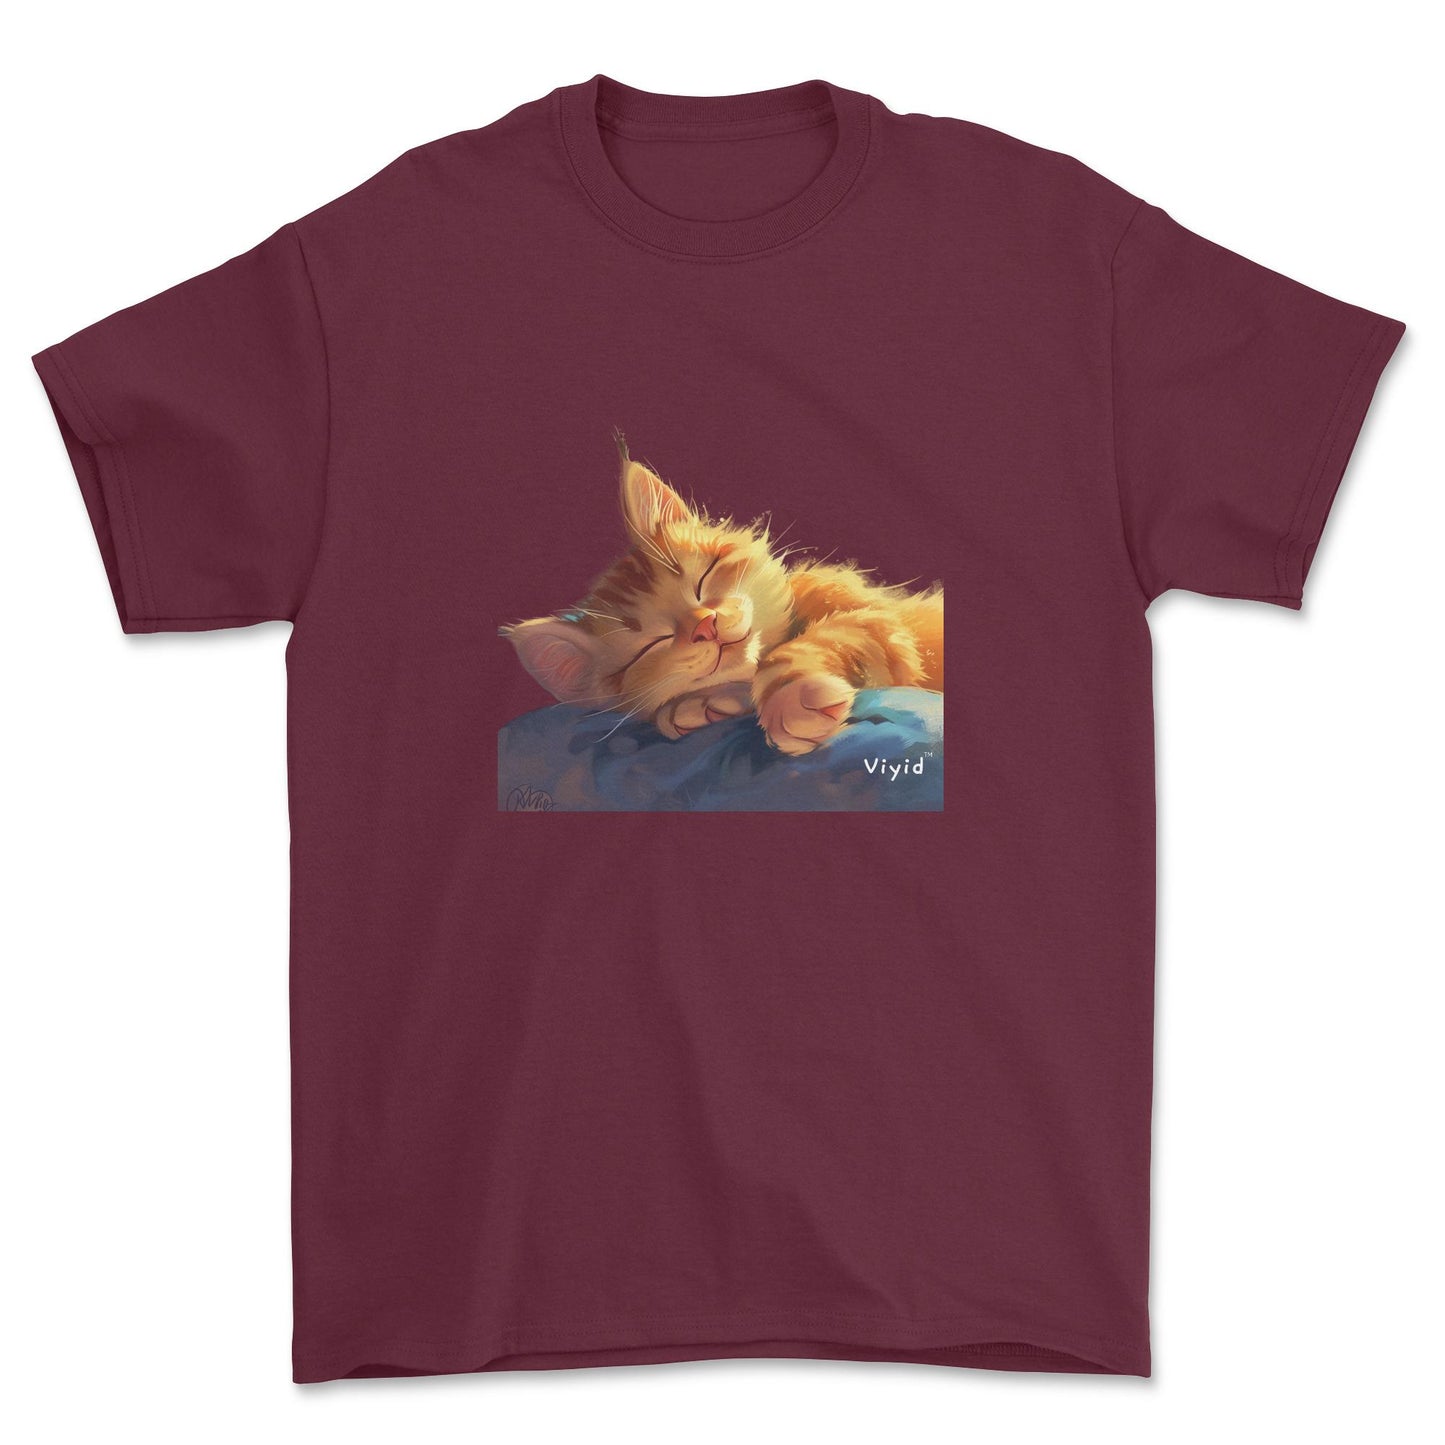 sleeping ginger cat youth t-shirt maroon